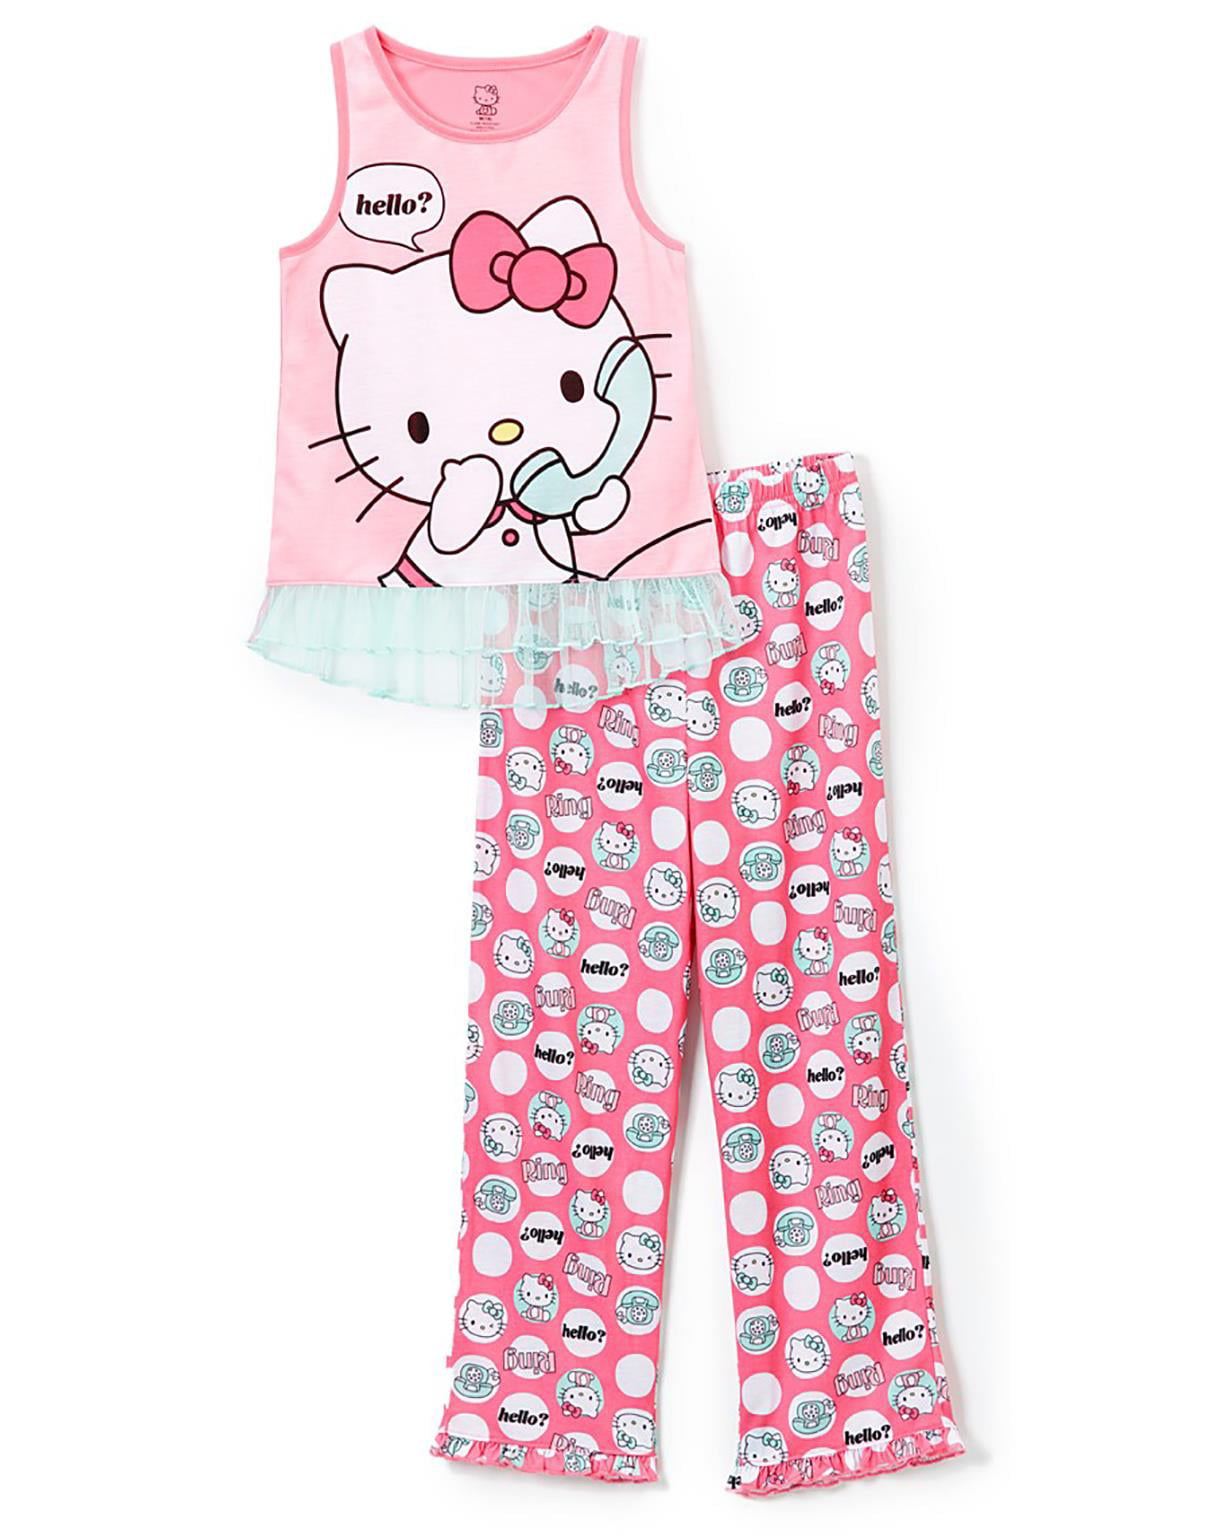 Hello Kitty Big Girls' 2pc Sleepwear Tank Set